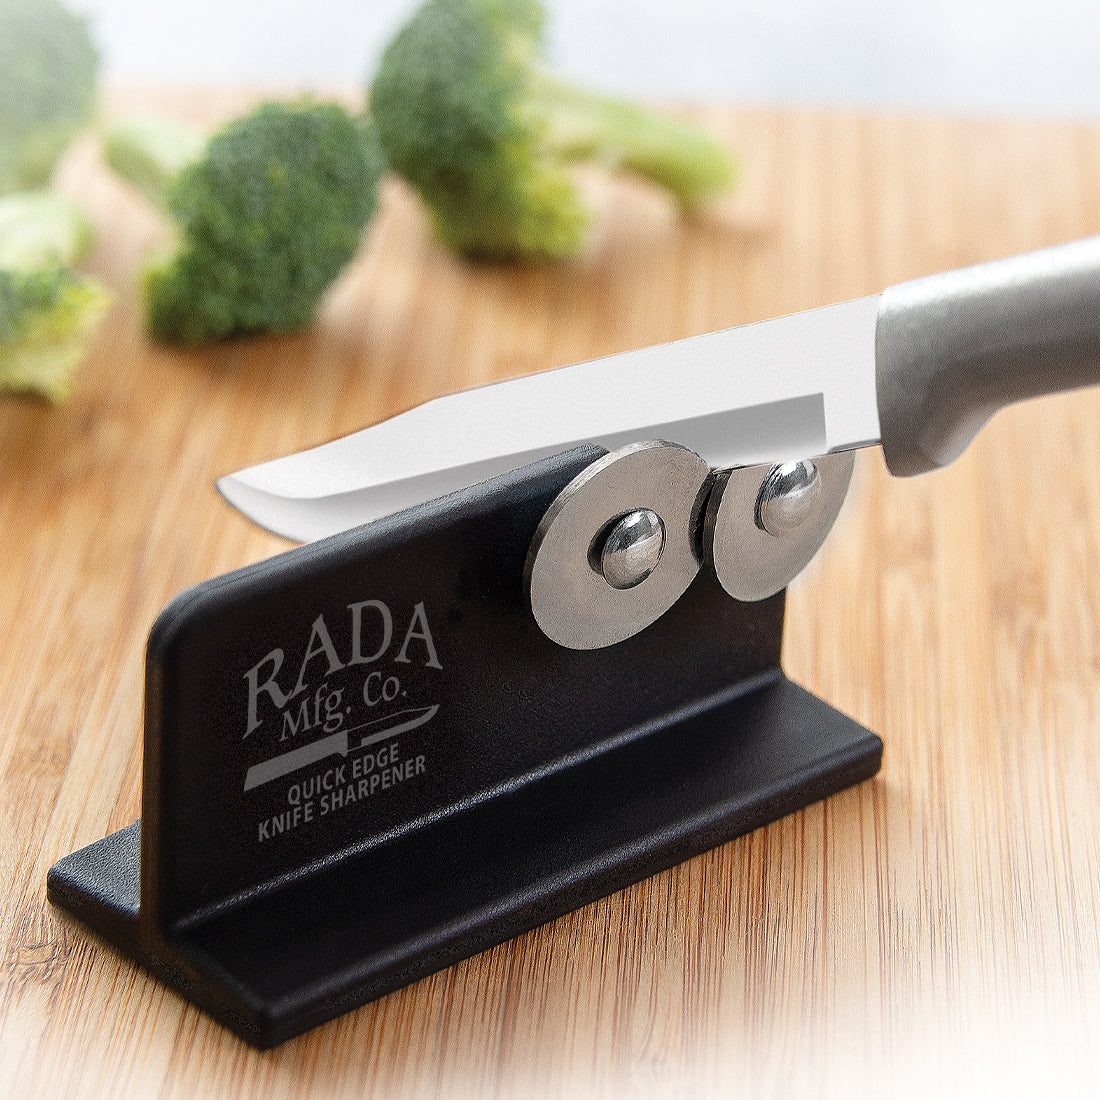 Rada Cutlery black Quick Edge Knife Sharpener with steel wheels sharpening a paring knife